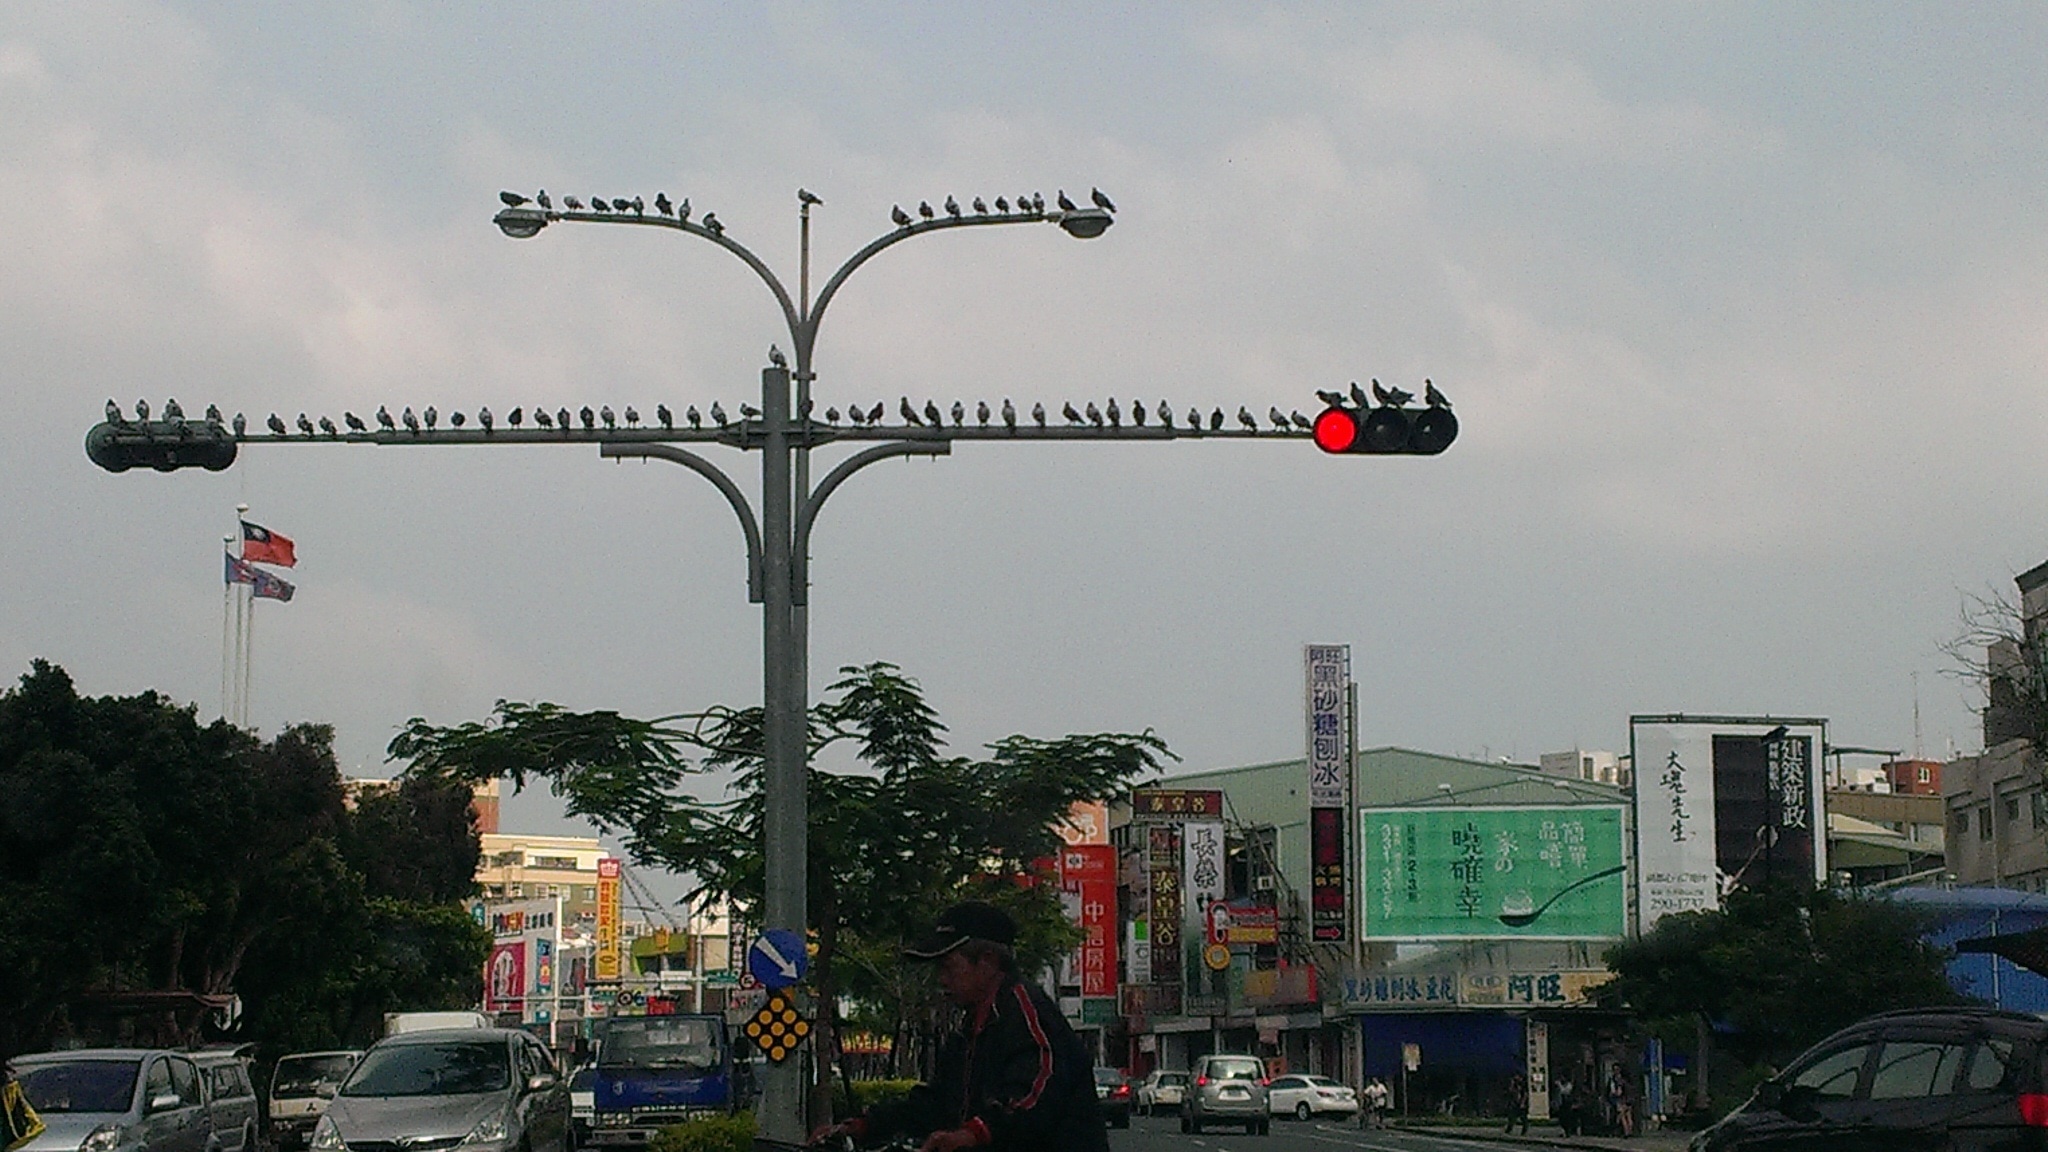 flock of bird and gray traffic lights